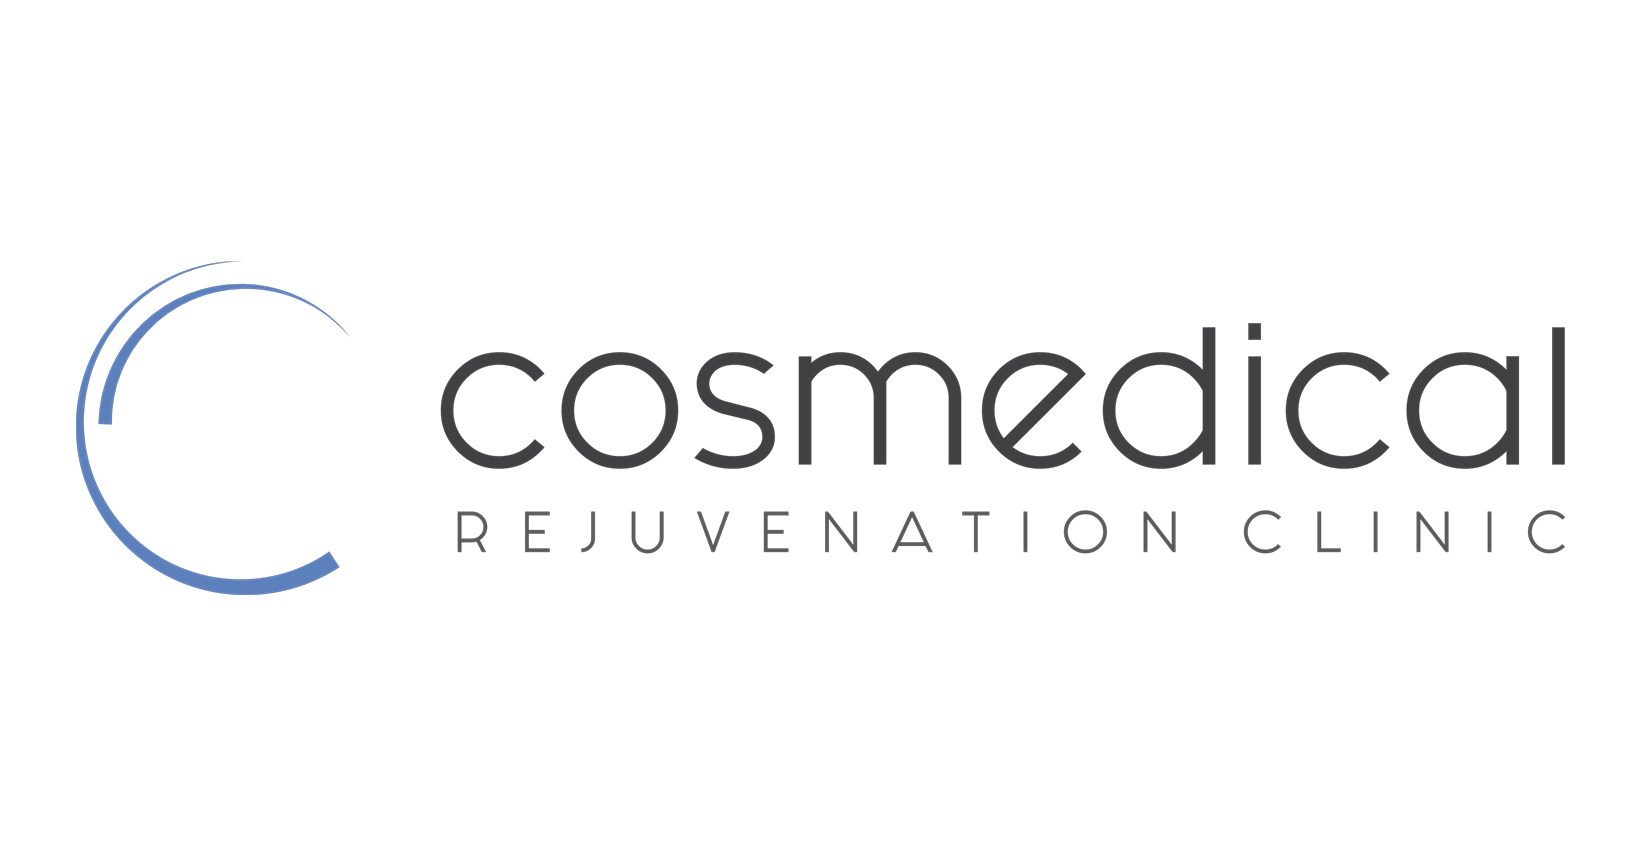 cosmedical rejuvenation clinic